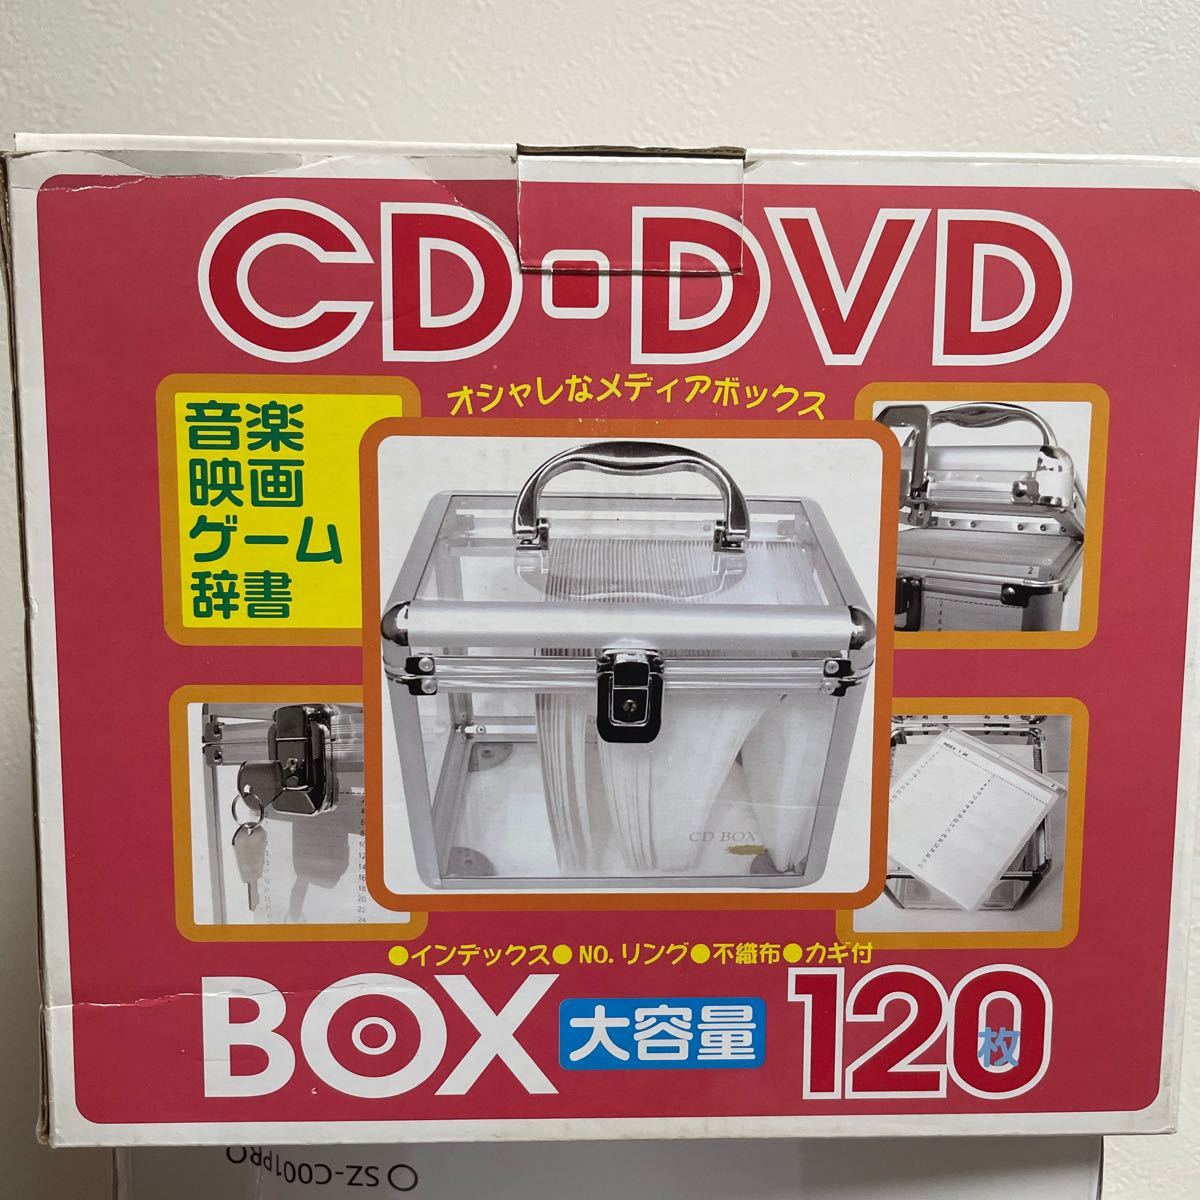 CDDVD BOX 大容量 120枚 鍵付き 不織布 ケース 新品 未使用_画像1